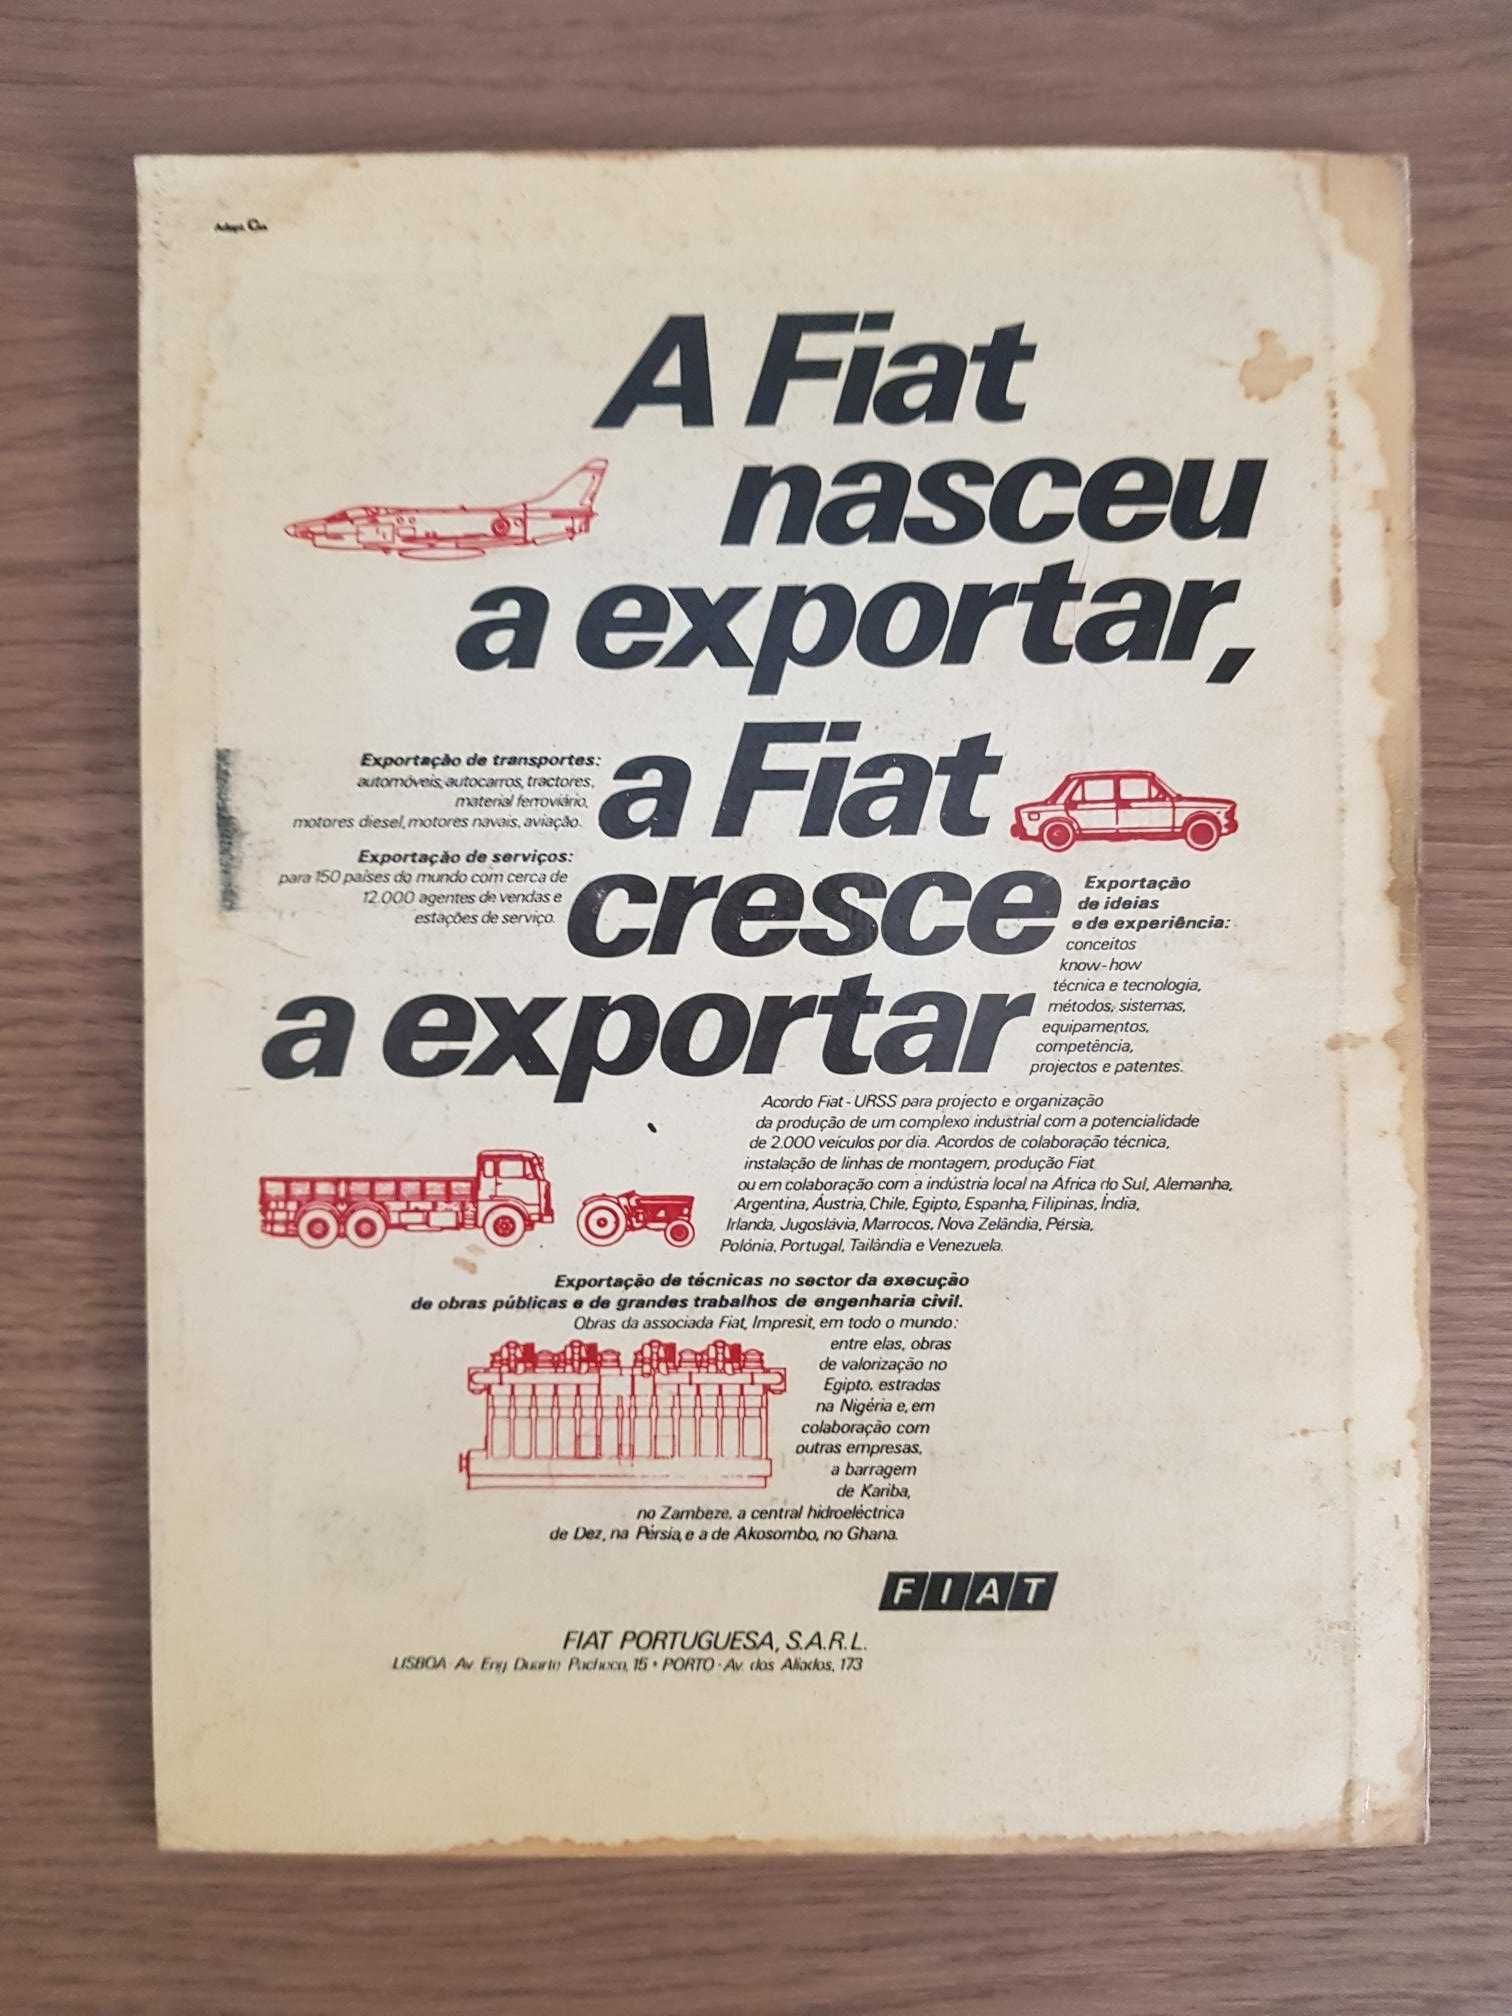 Revista Técnica Automóvel Nº90 (Ano:1970)